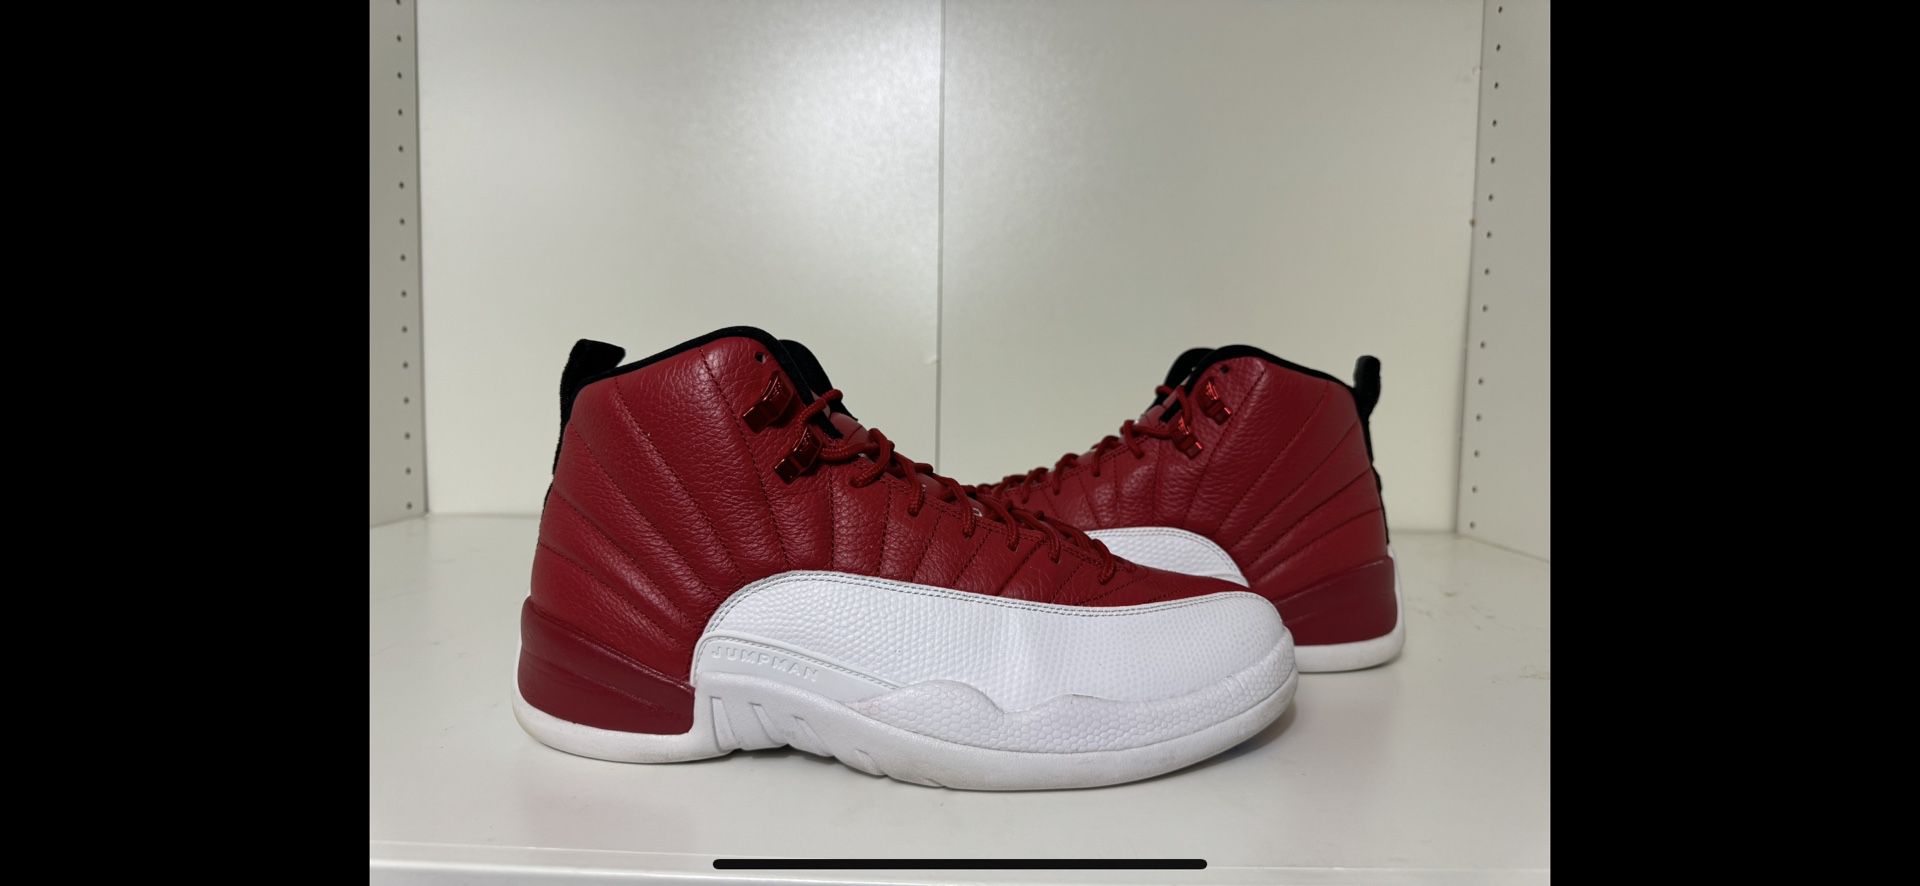 Jordan 12 Cherry Size 9.5 Clean 